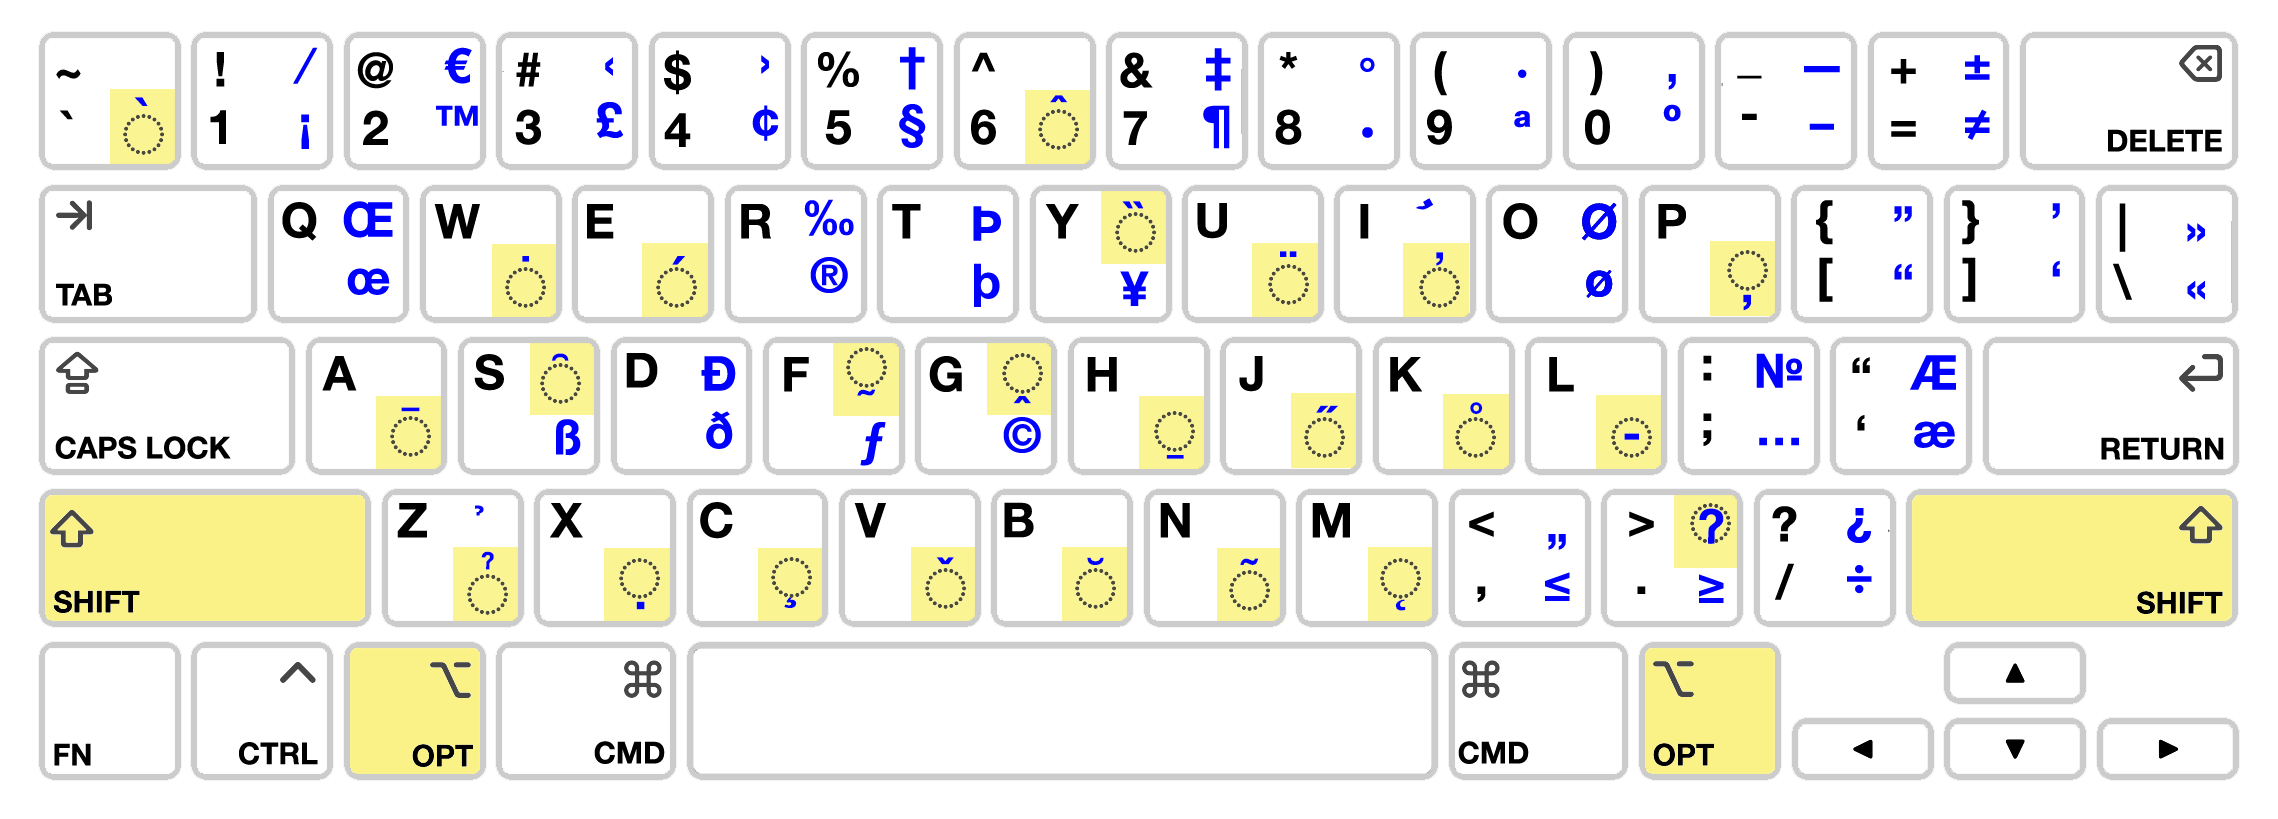 Apple Macintosh Keyboard Layout Image